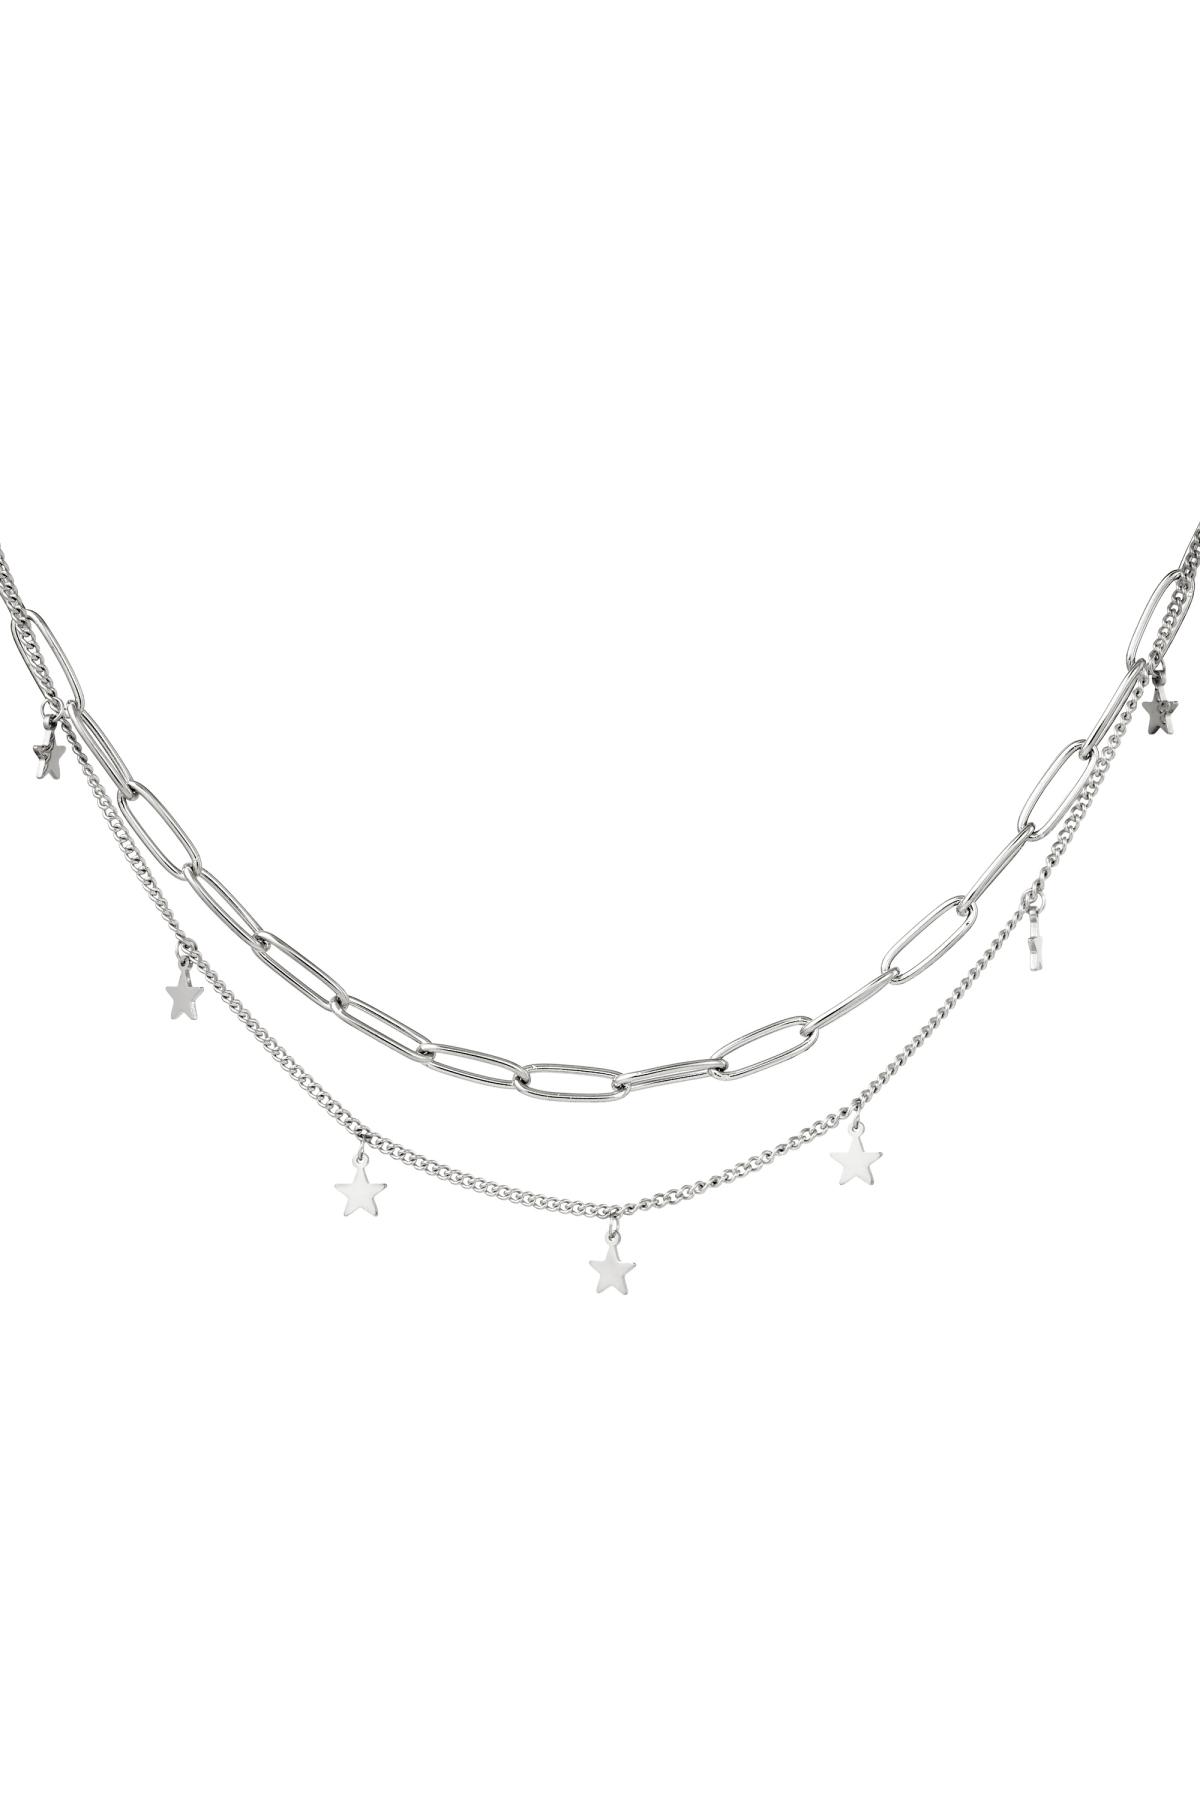 Halskette Chain Star Silver Silber Edelstahl